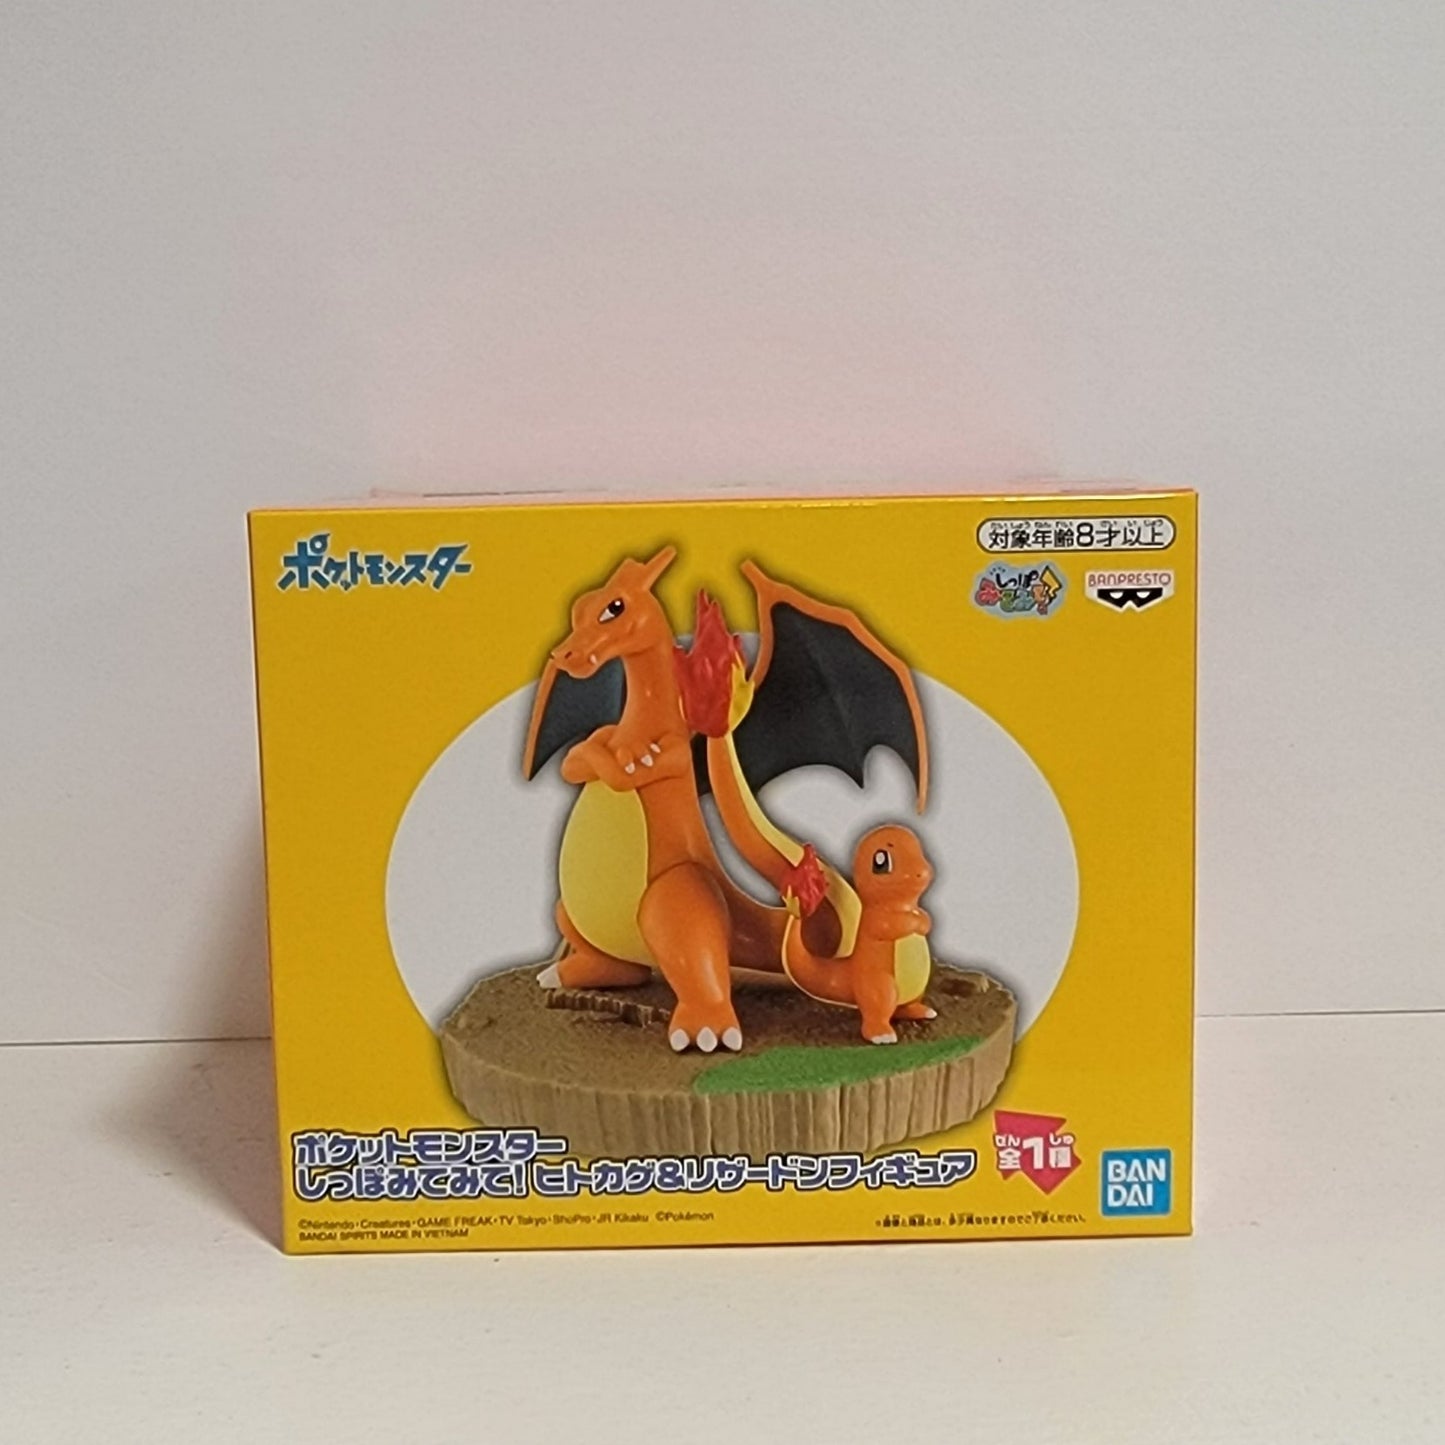 Pokémon Charizard & Charmander Figure With Base Stand